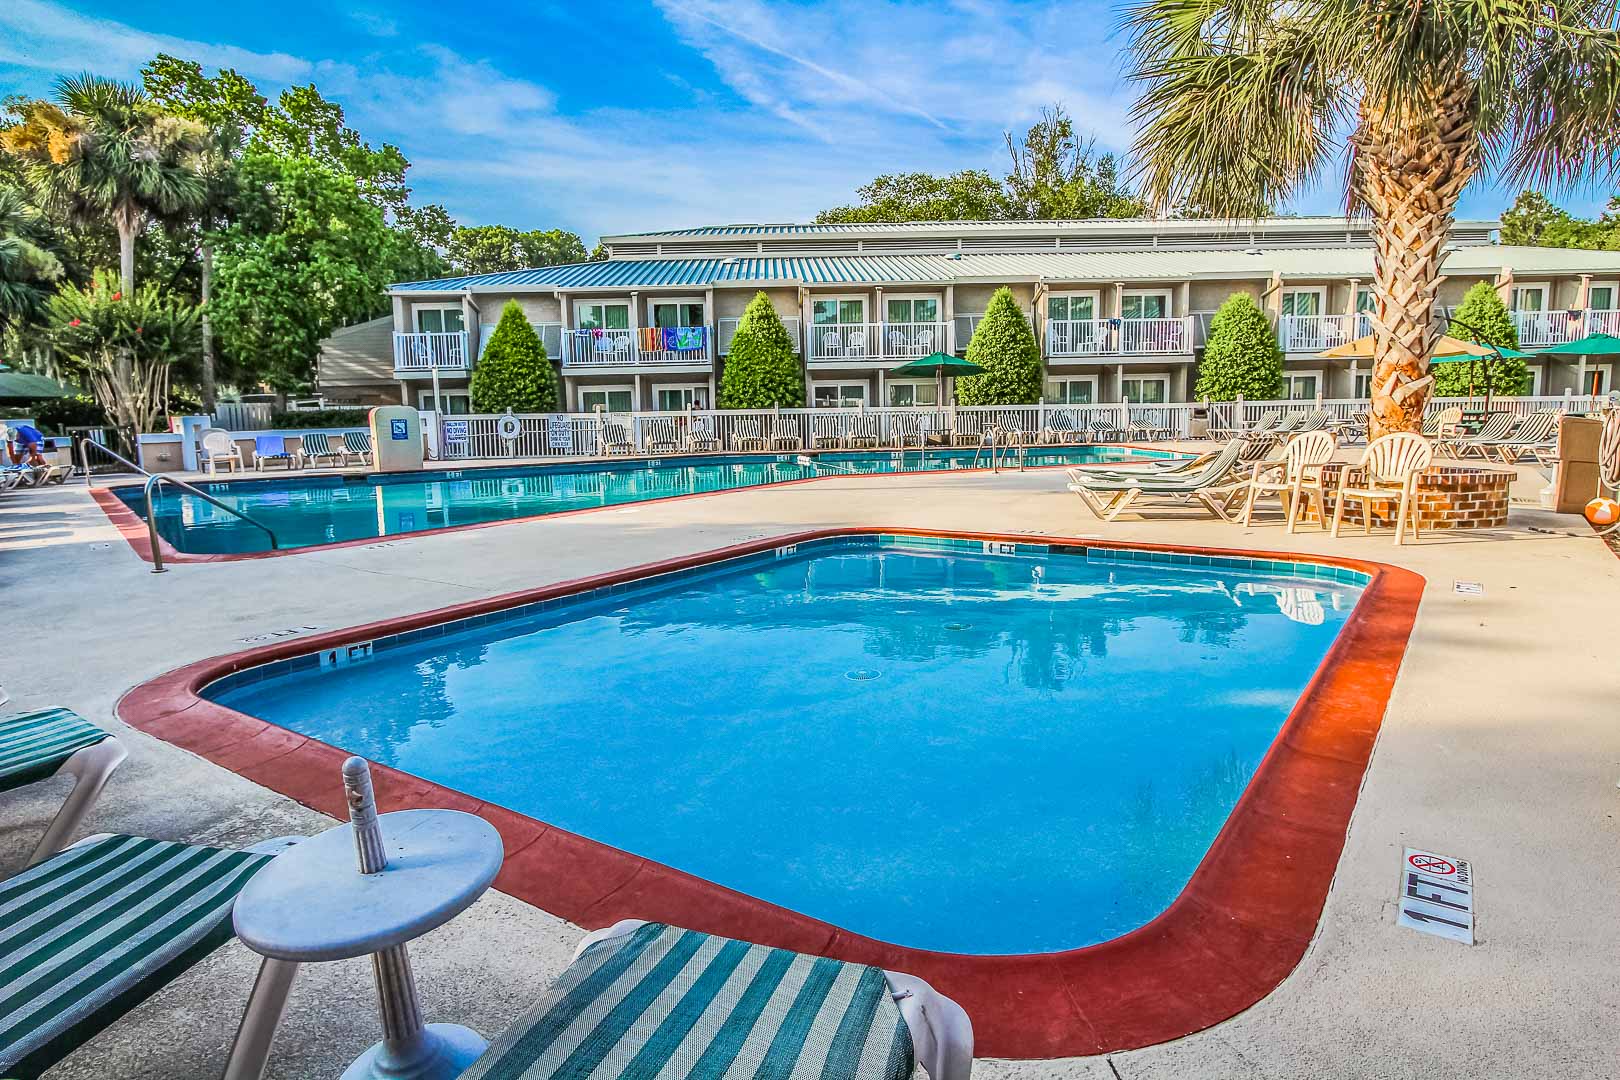 A peaceful outdoor swimming pool at VRI's Players Club Resort in Hilton Head Island, South Carolina.